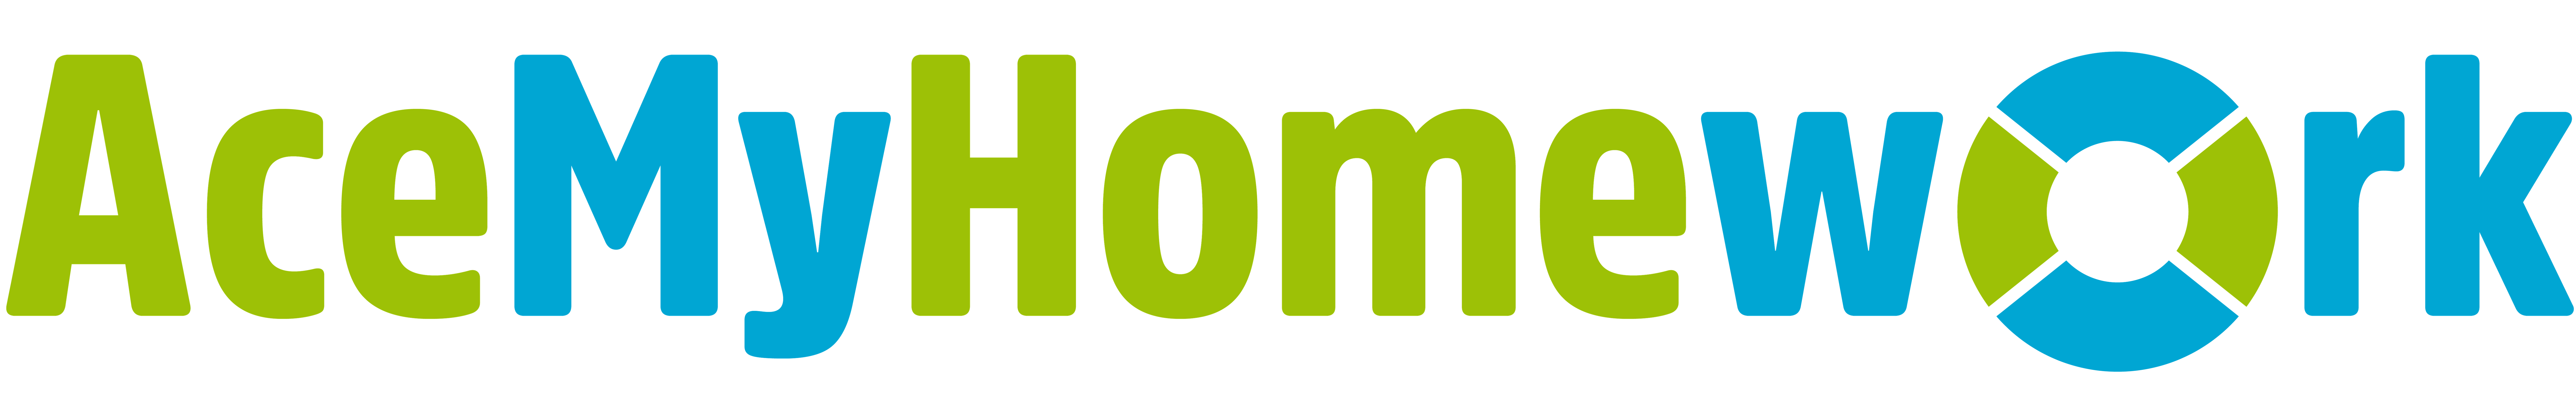 Acemyhomework logo